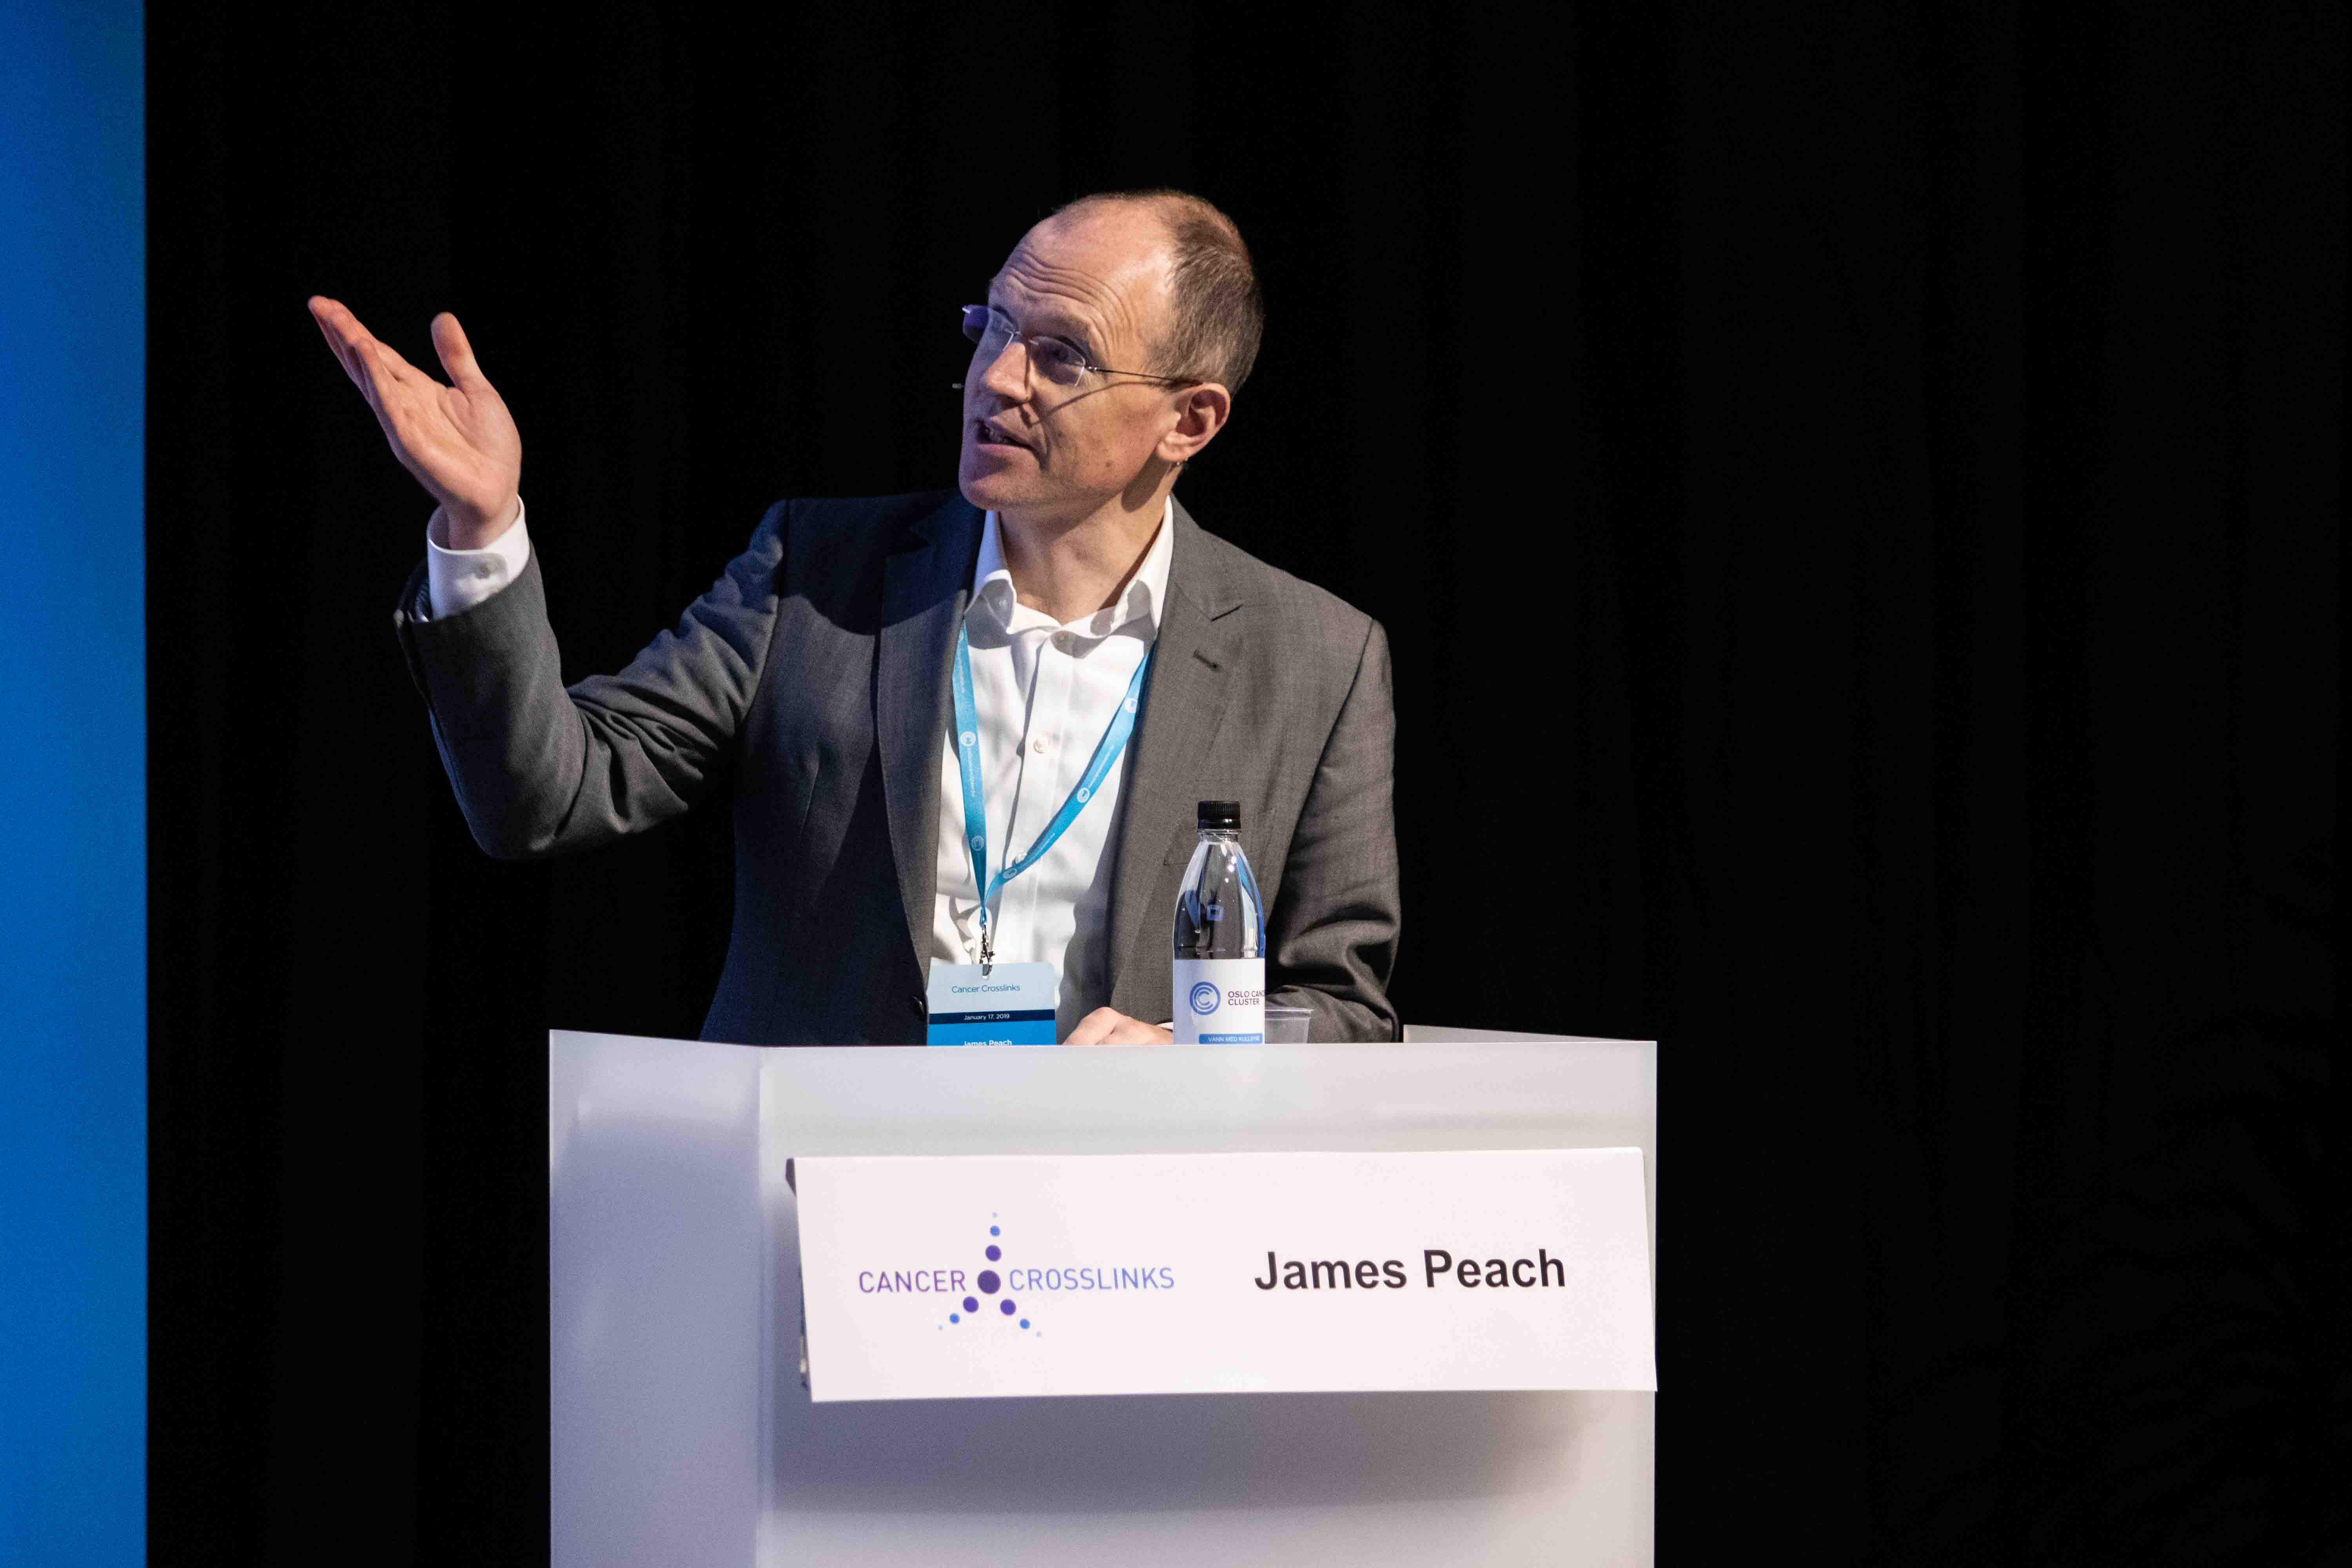 James Peach presenting at Cancer Crosslinks 2019